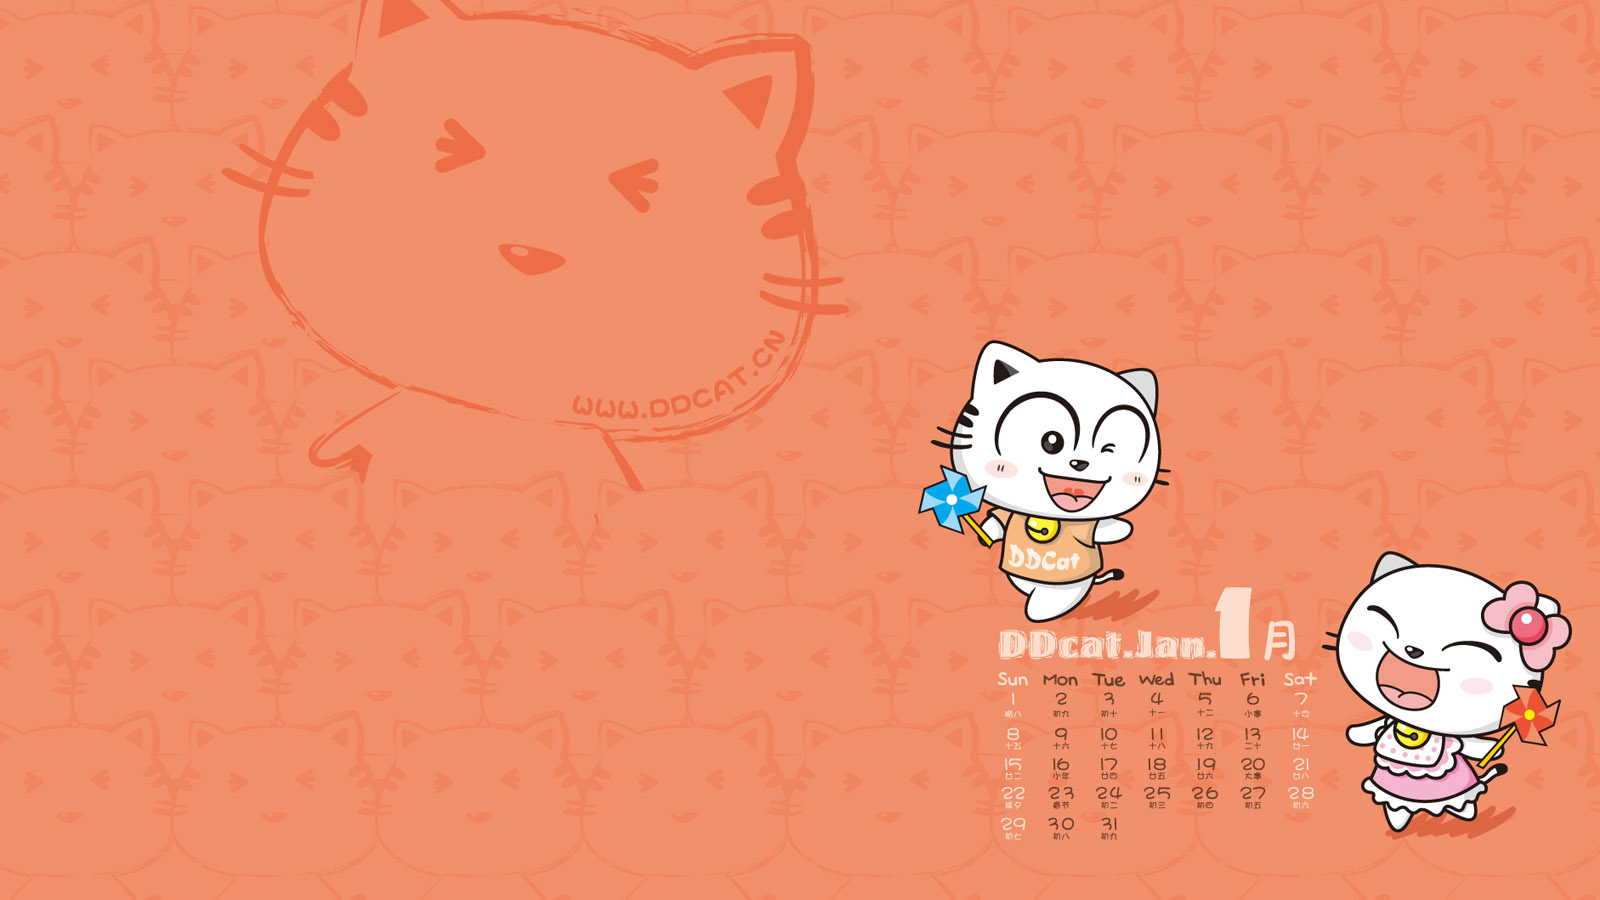 Ding Dong cat January 2012 calendar wallpaper